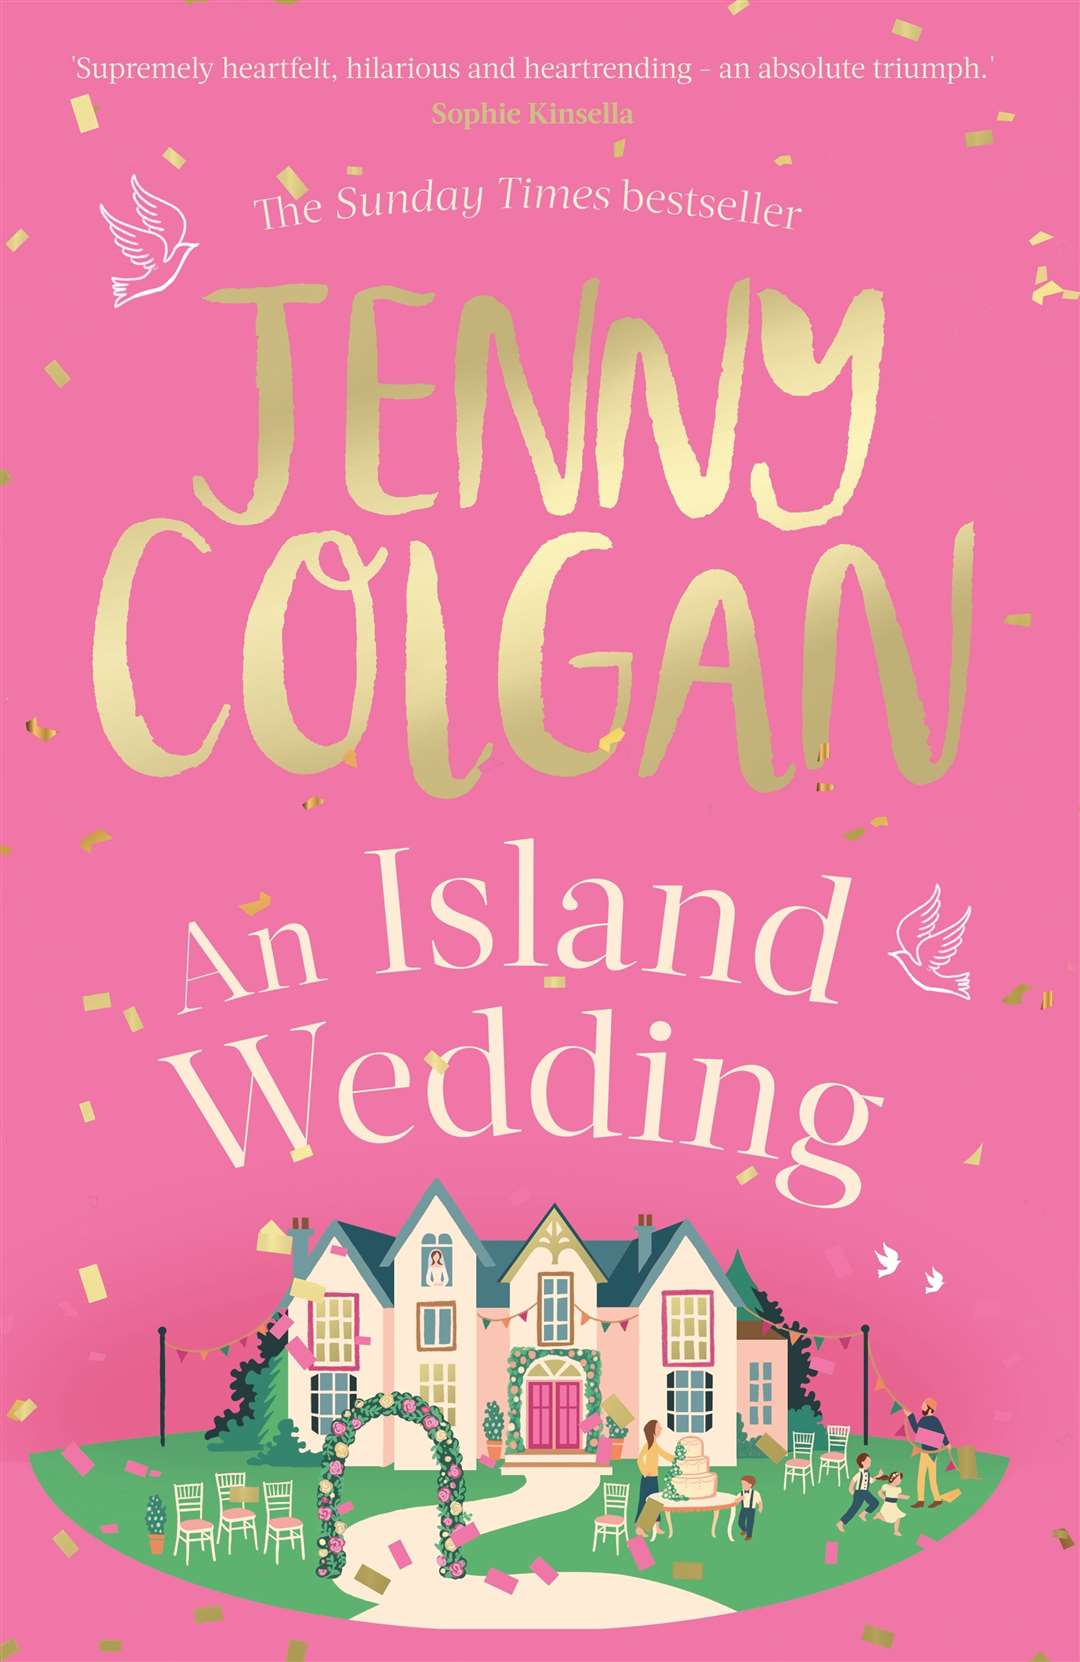 Jenny Colgan's acclaimed novel An Island Wedding.